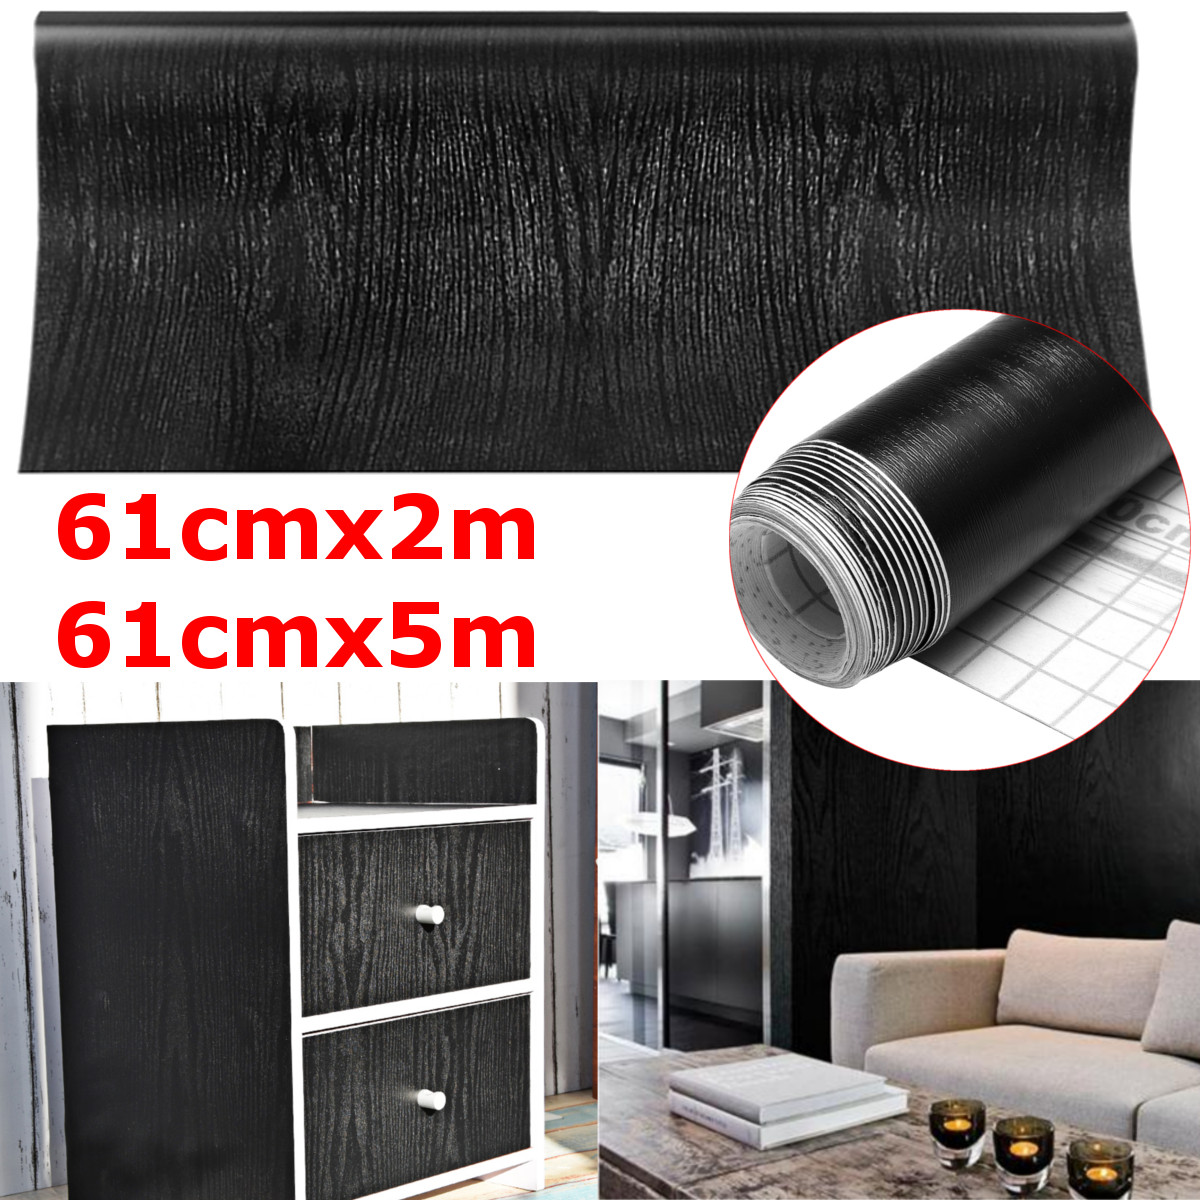 Black-Wood-Looking-Textured-Self-Adhesive-Decor-Contact-Paper-Vinyl-Shelf-Liner-Wall-Paper-1304238-2